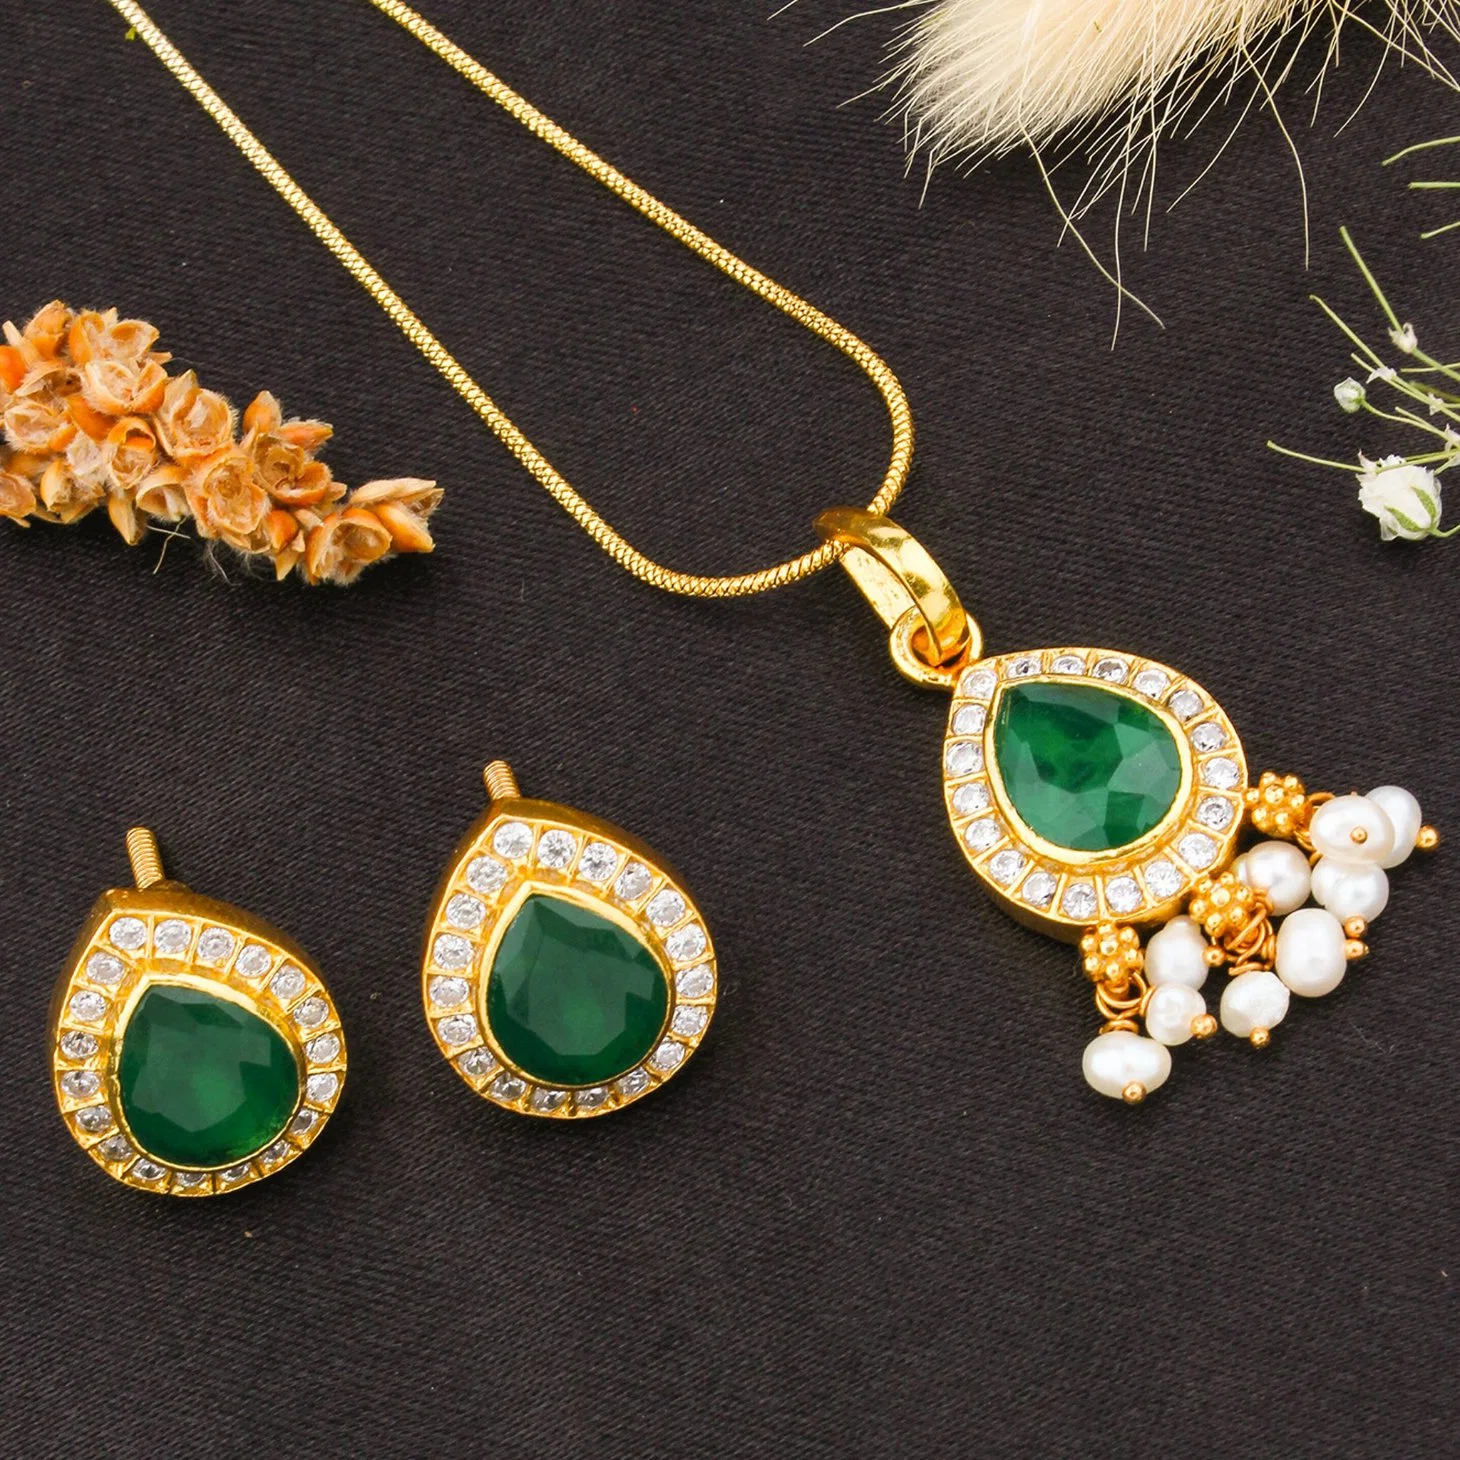 The Paresha Drop Shape 925 Sterling Silver Earrings Pendant Jewelry Set